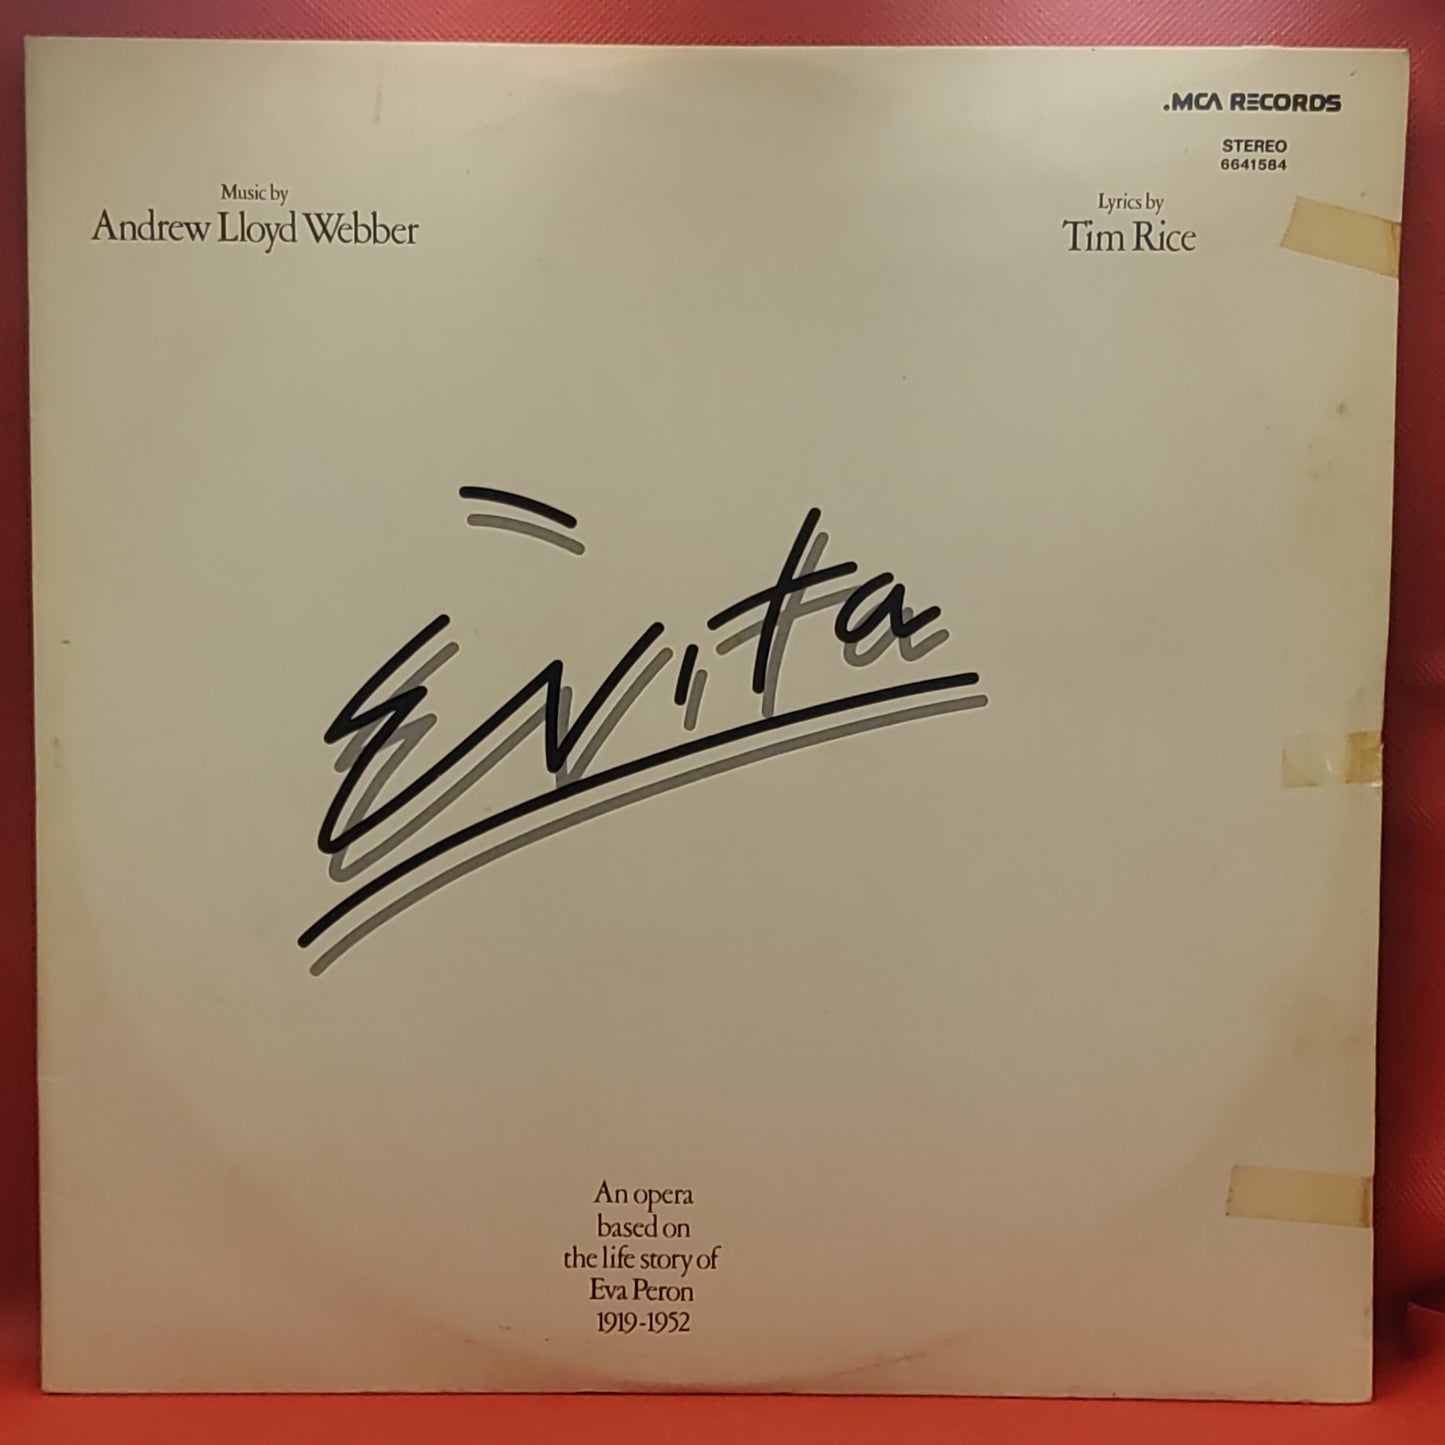 Andrew Lloyd Webber And Tim Rice – Evita